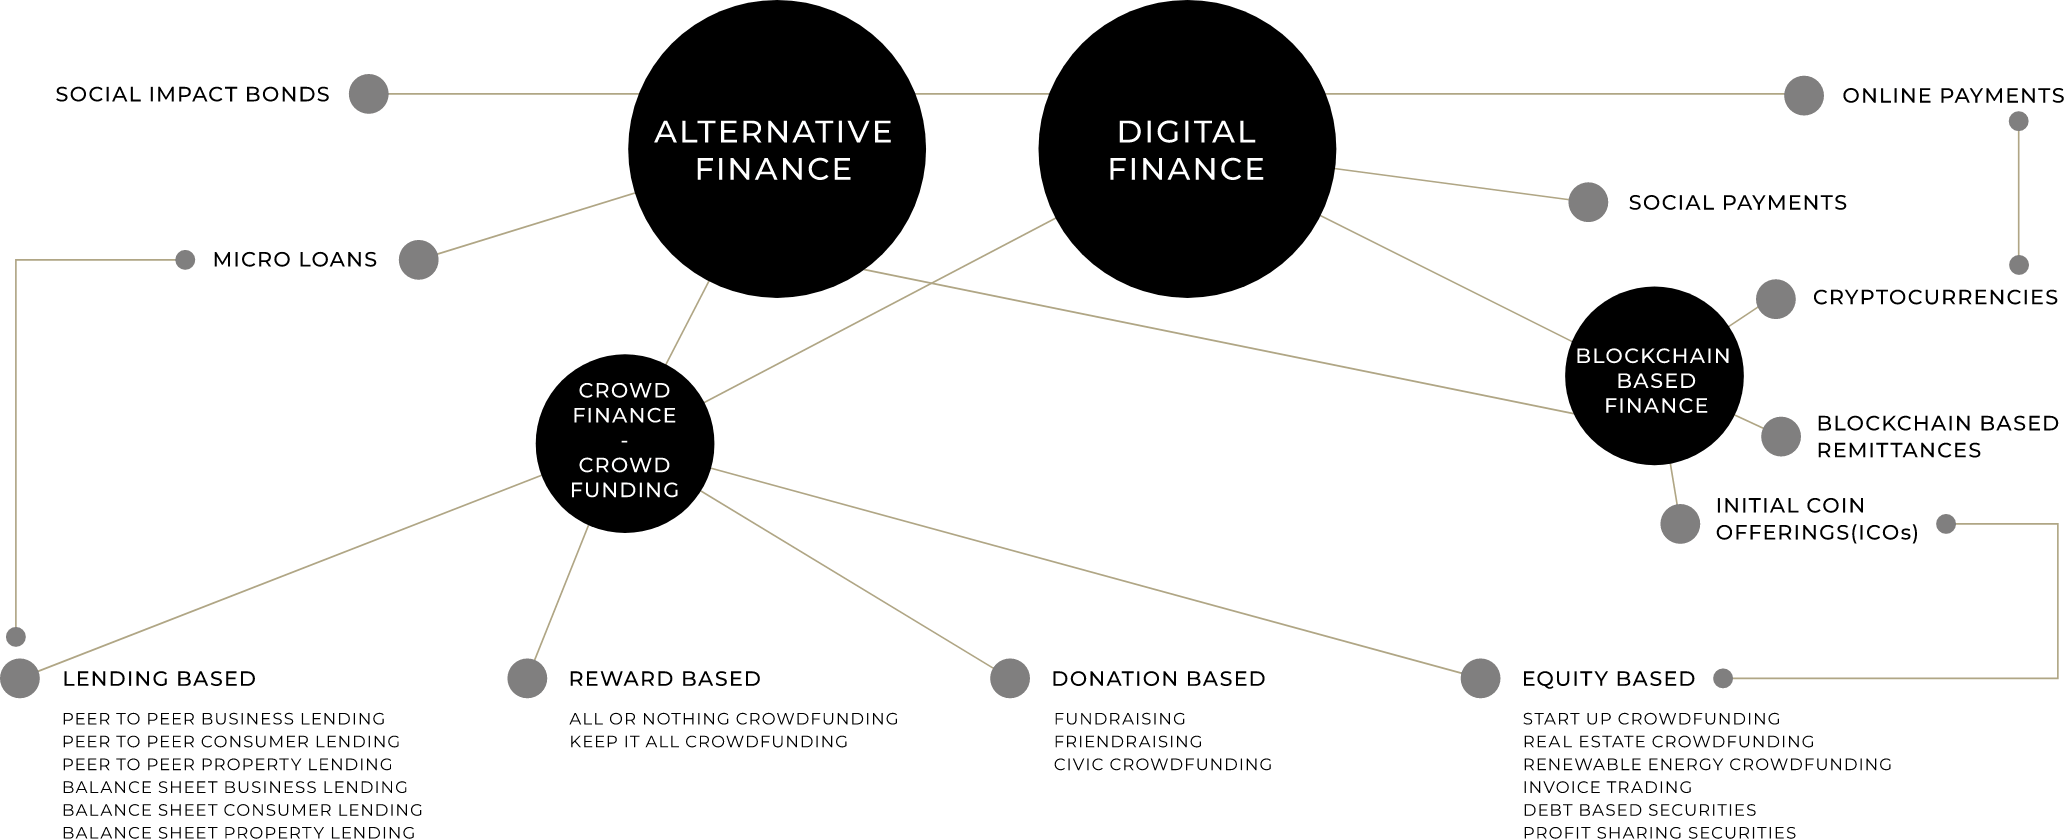 Crowdfunding Alternative Finance Image